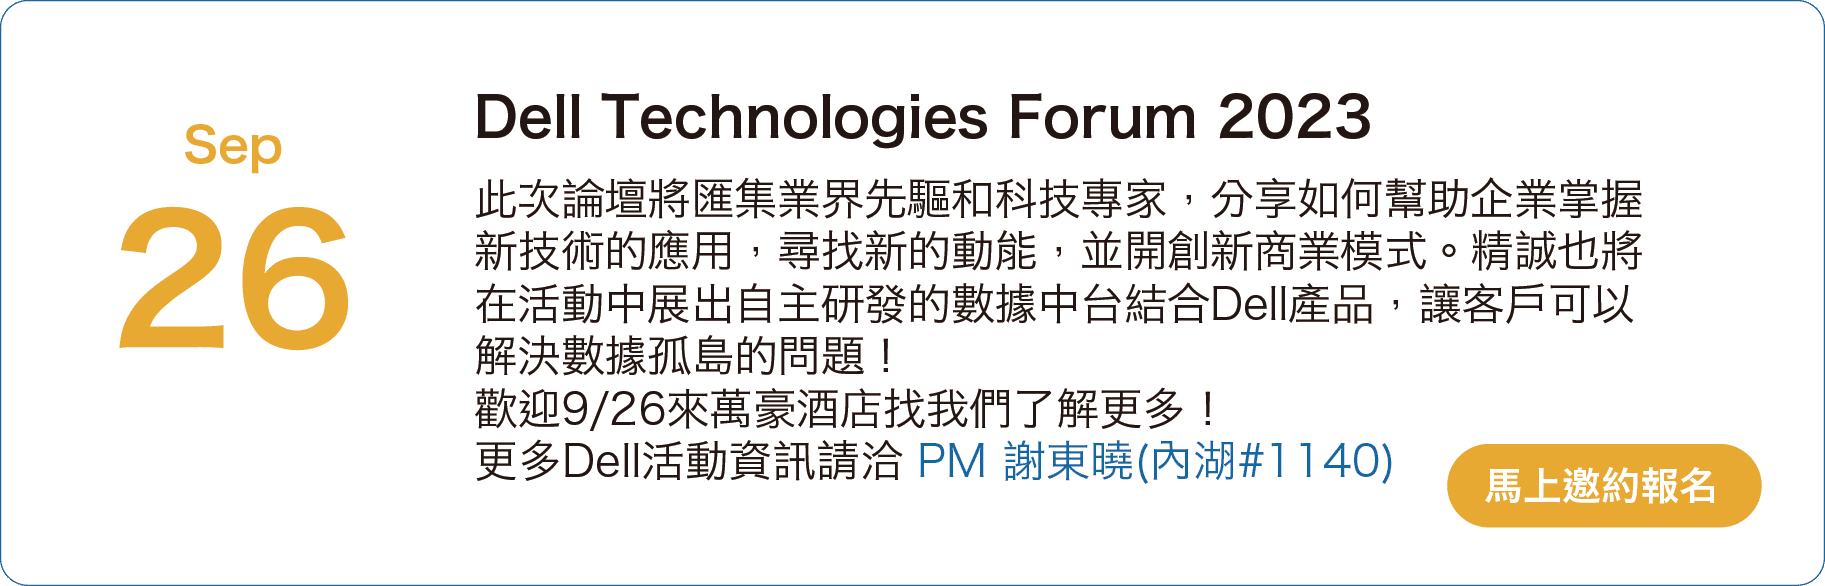 9/26 Dell Technologies Forum 2023